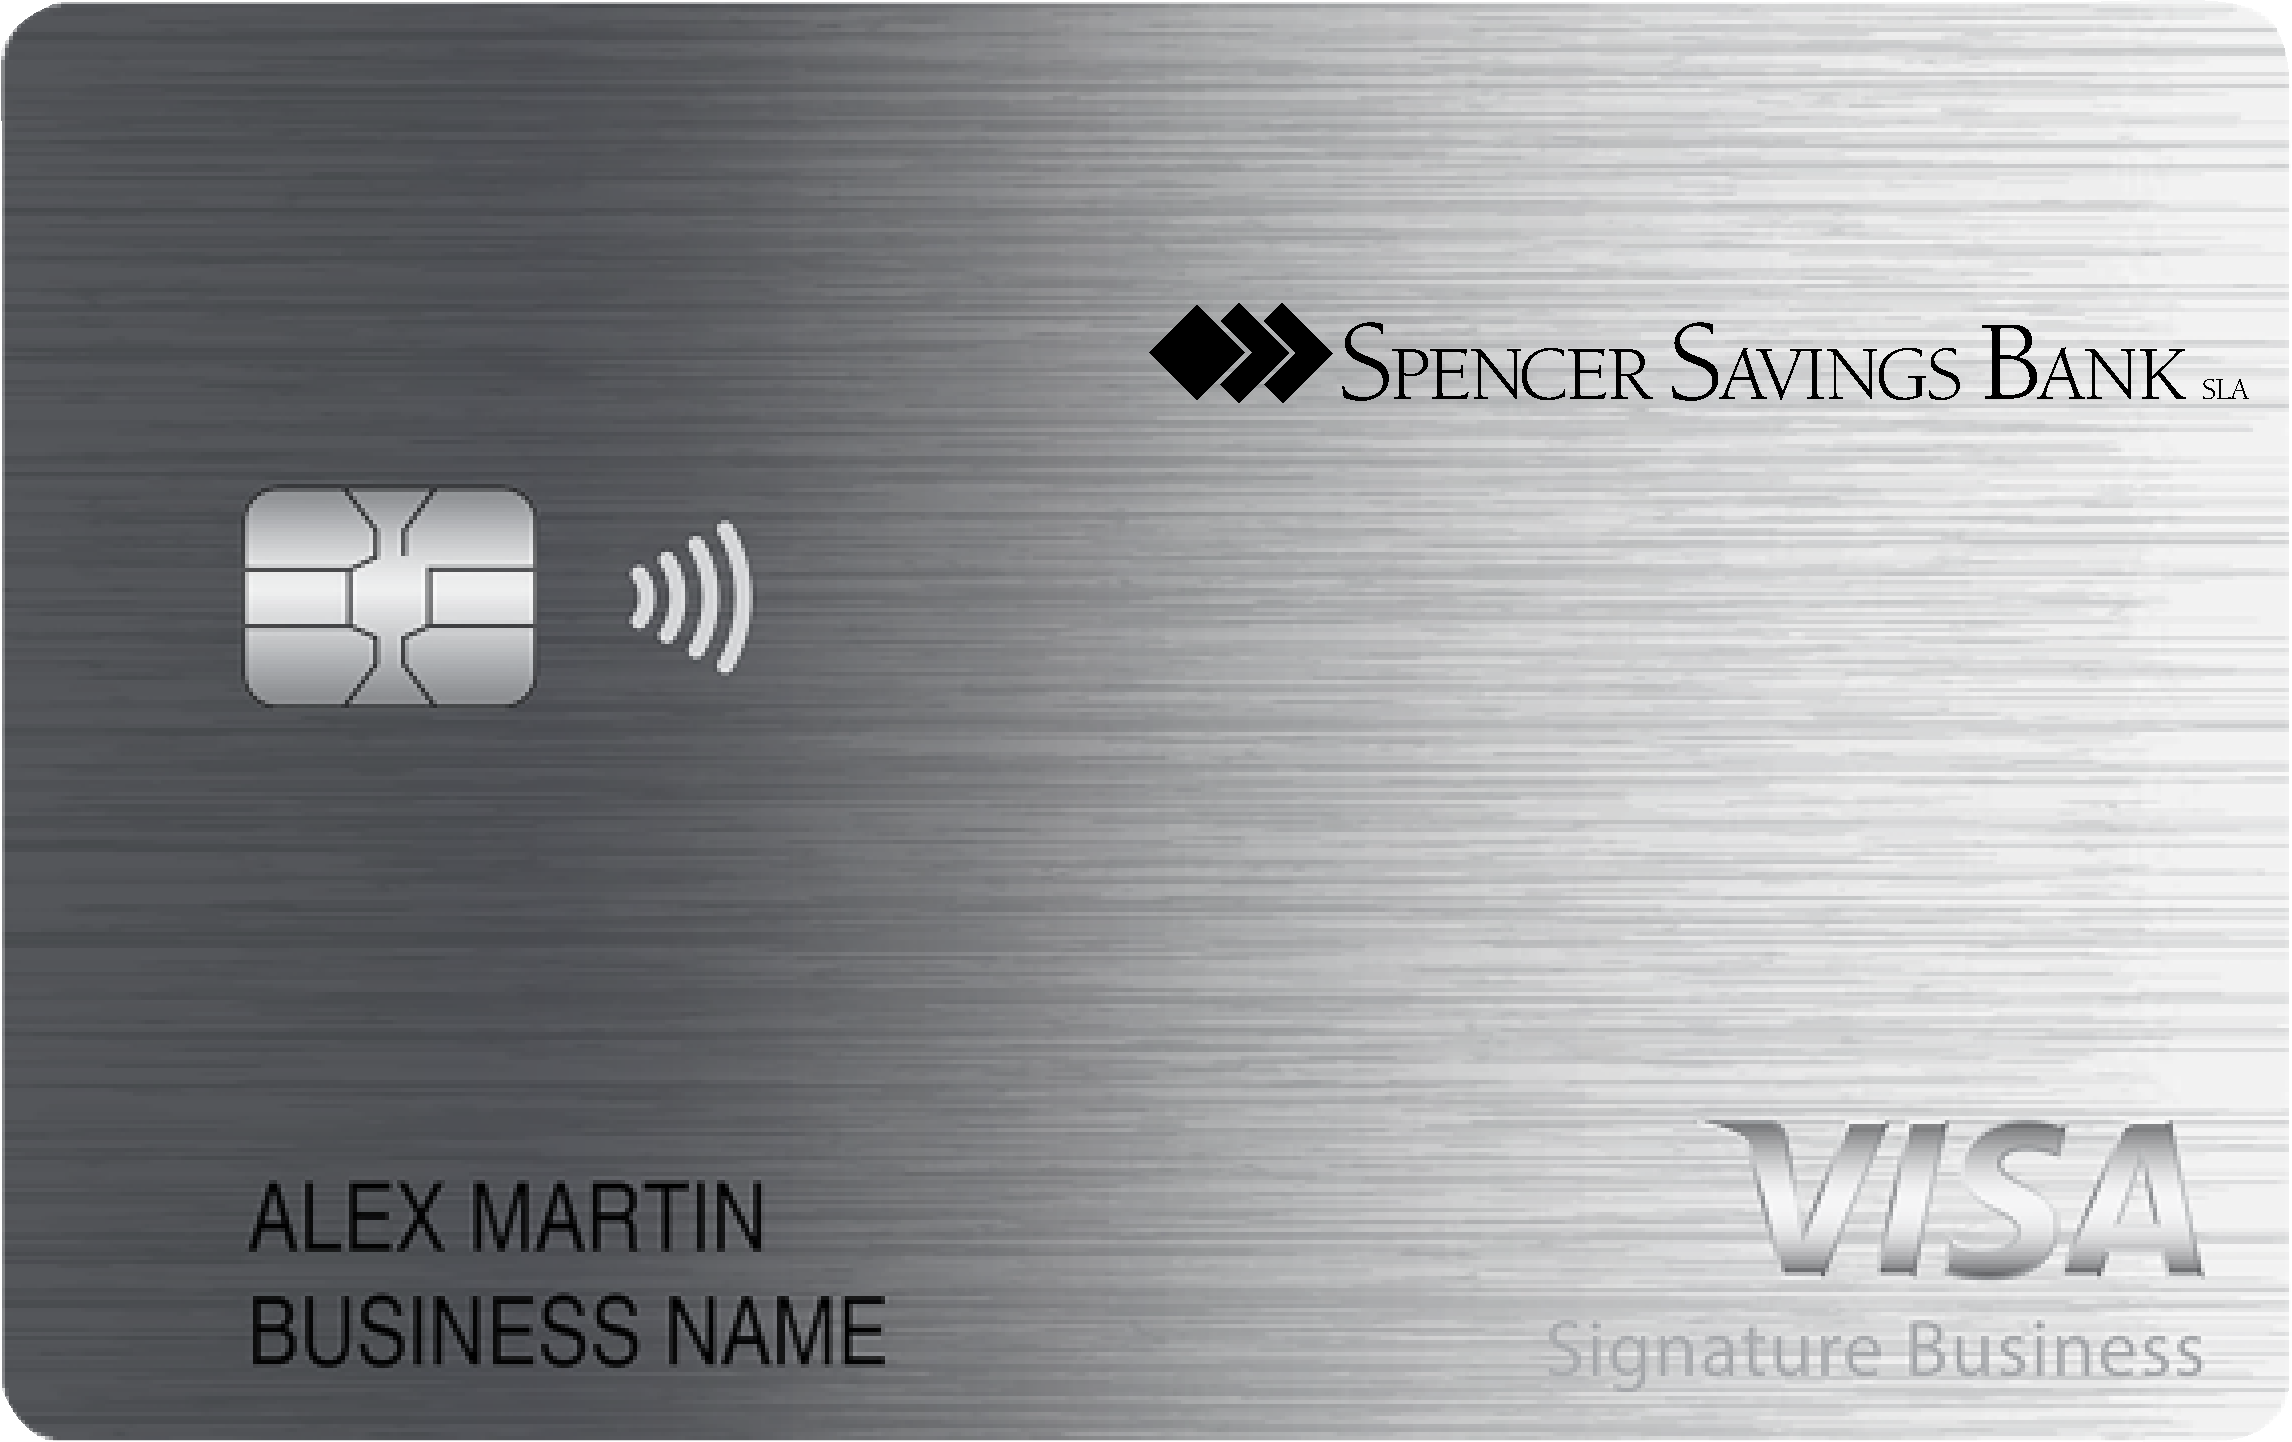 Spencer Savings Bank Smart Business Rewards Card